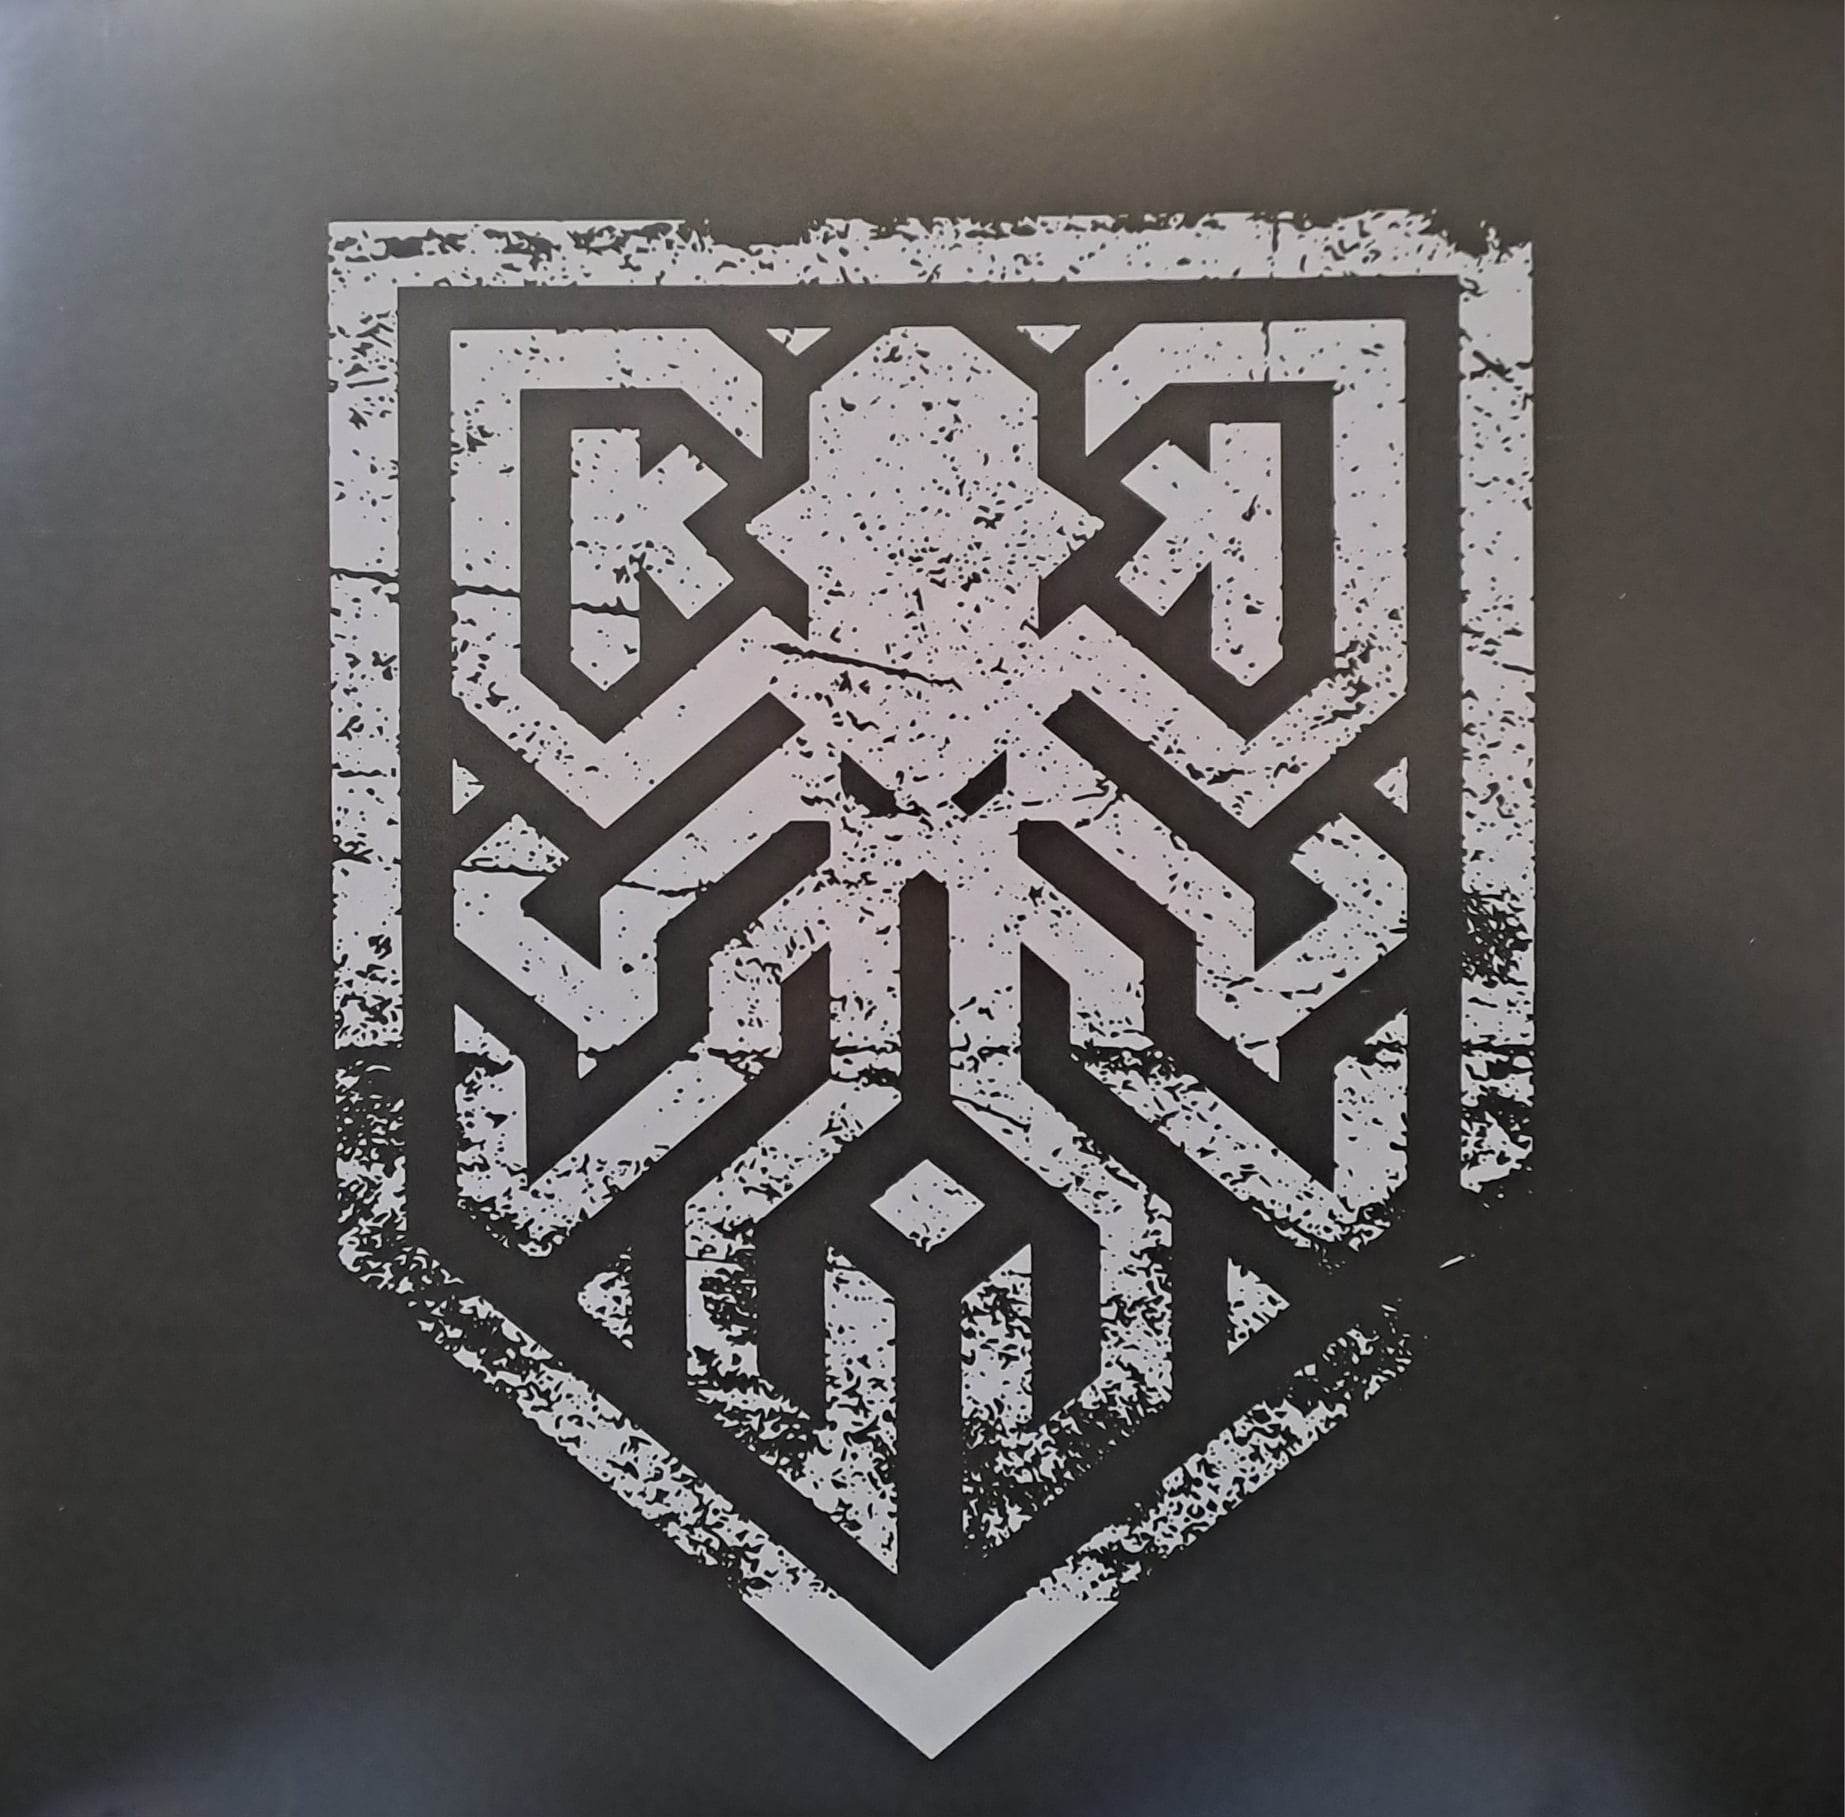 Kraken 01 LP (double album) - vinyle hardcore